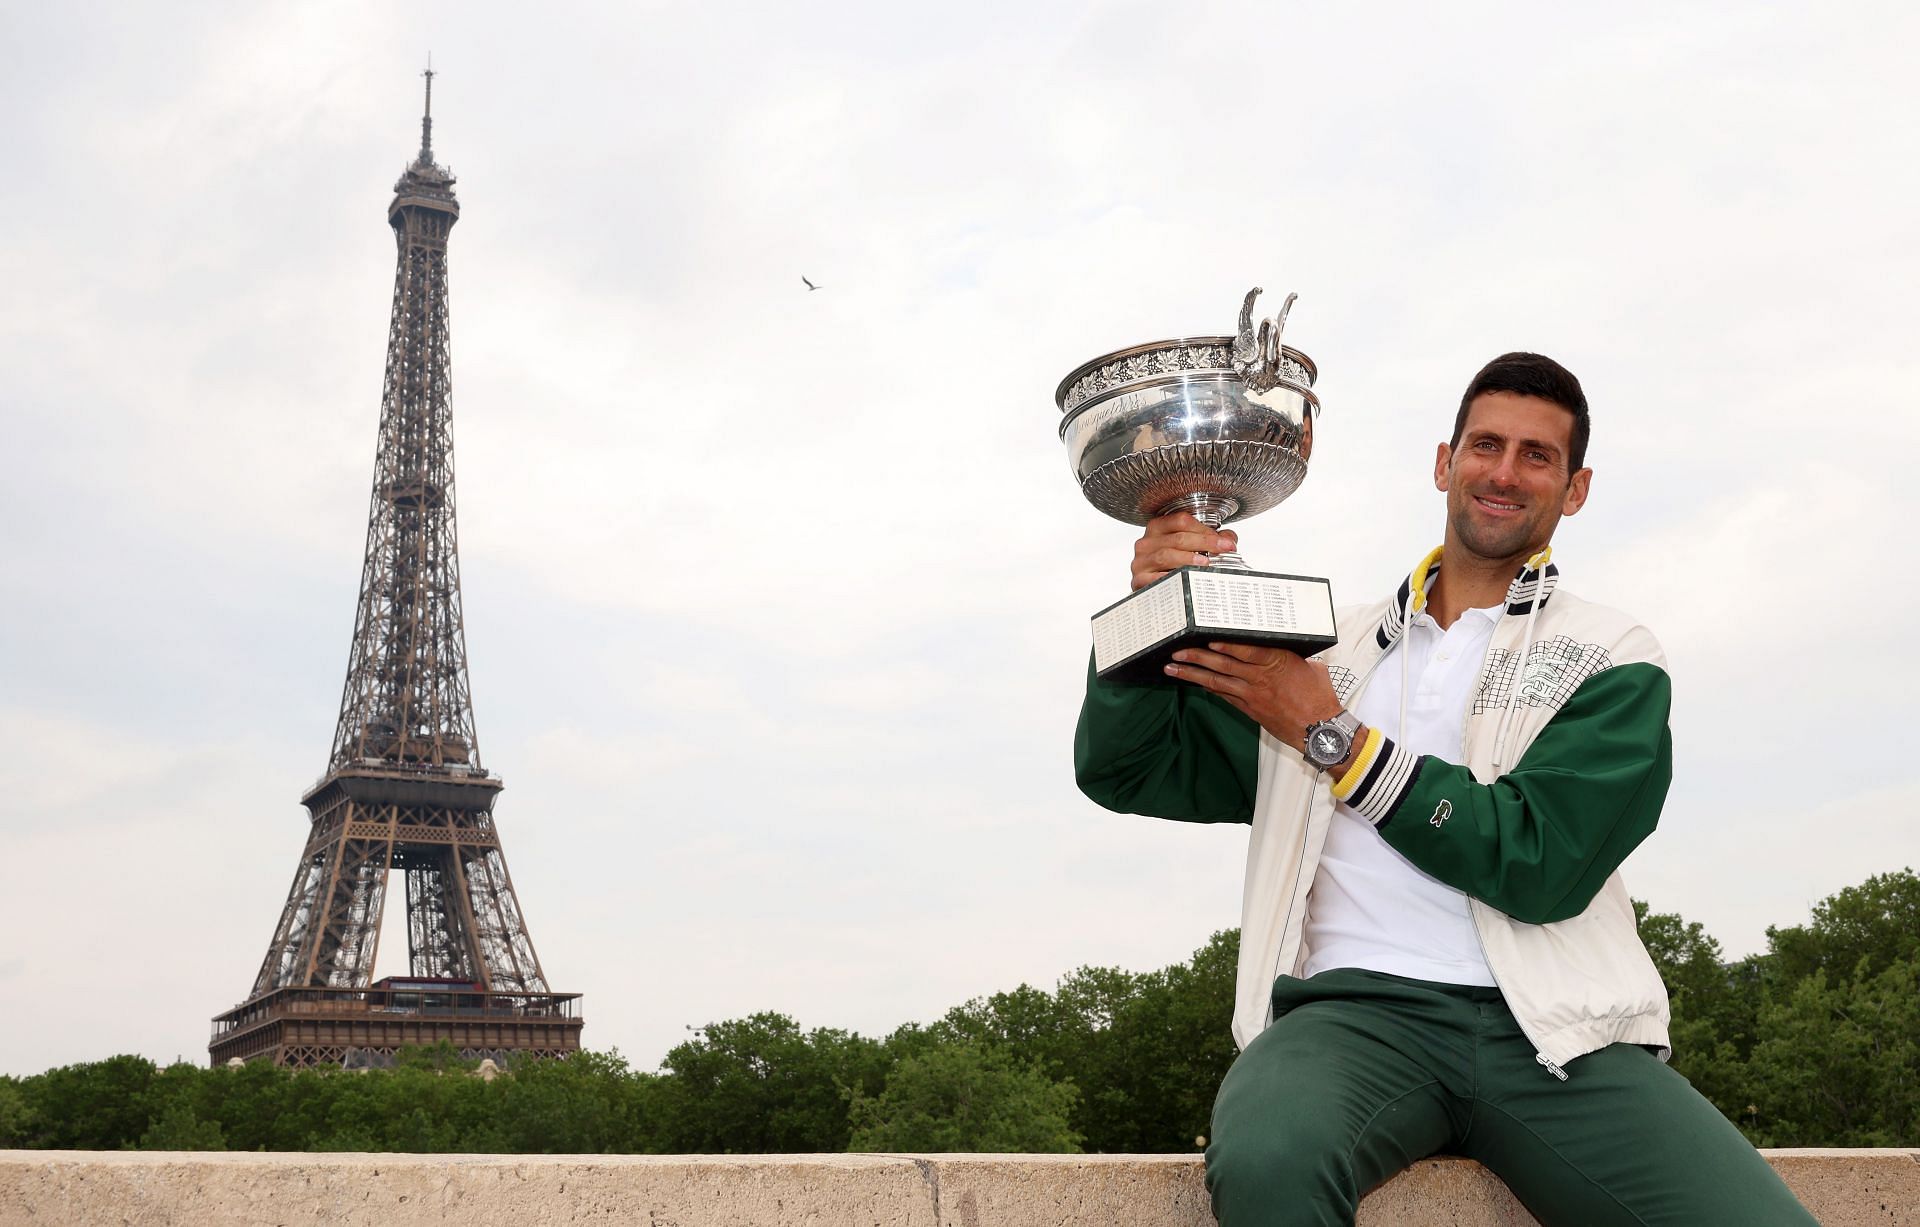 Novak Djokovic will be seeded second behind Carlos Alcaraz at Wimbledon this year.